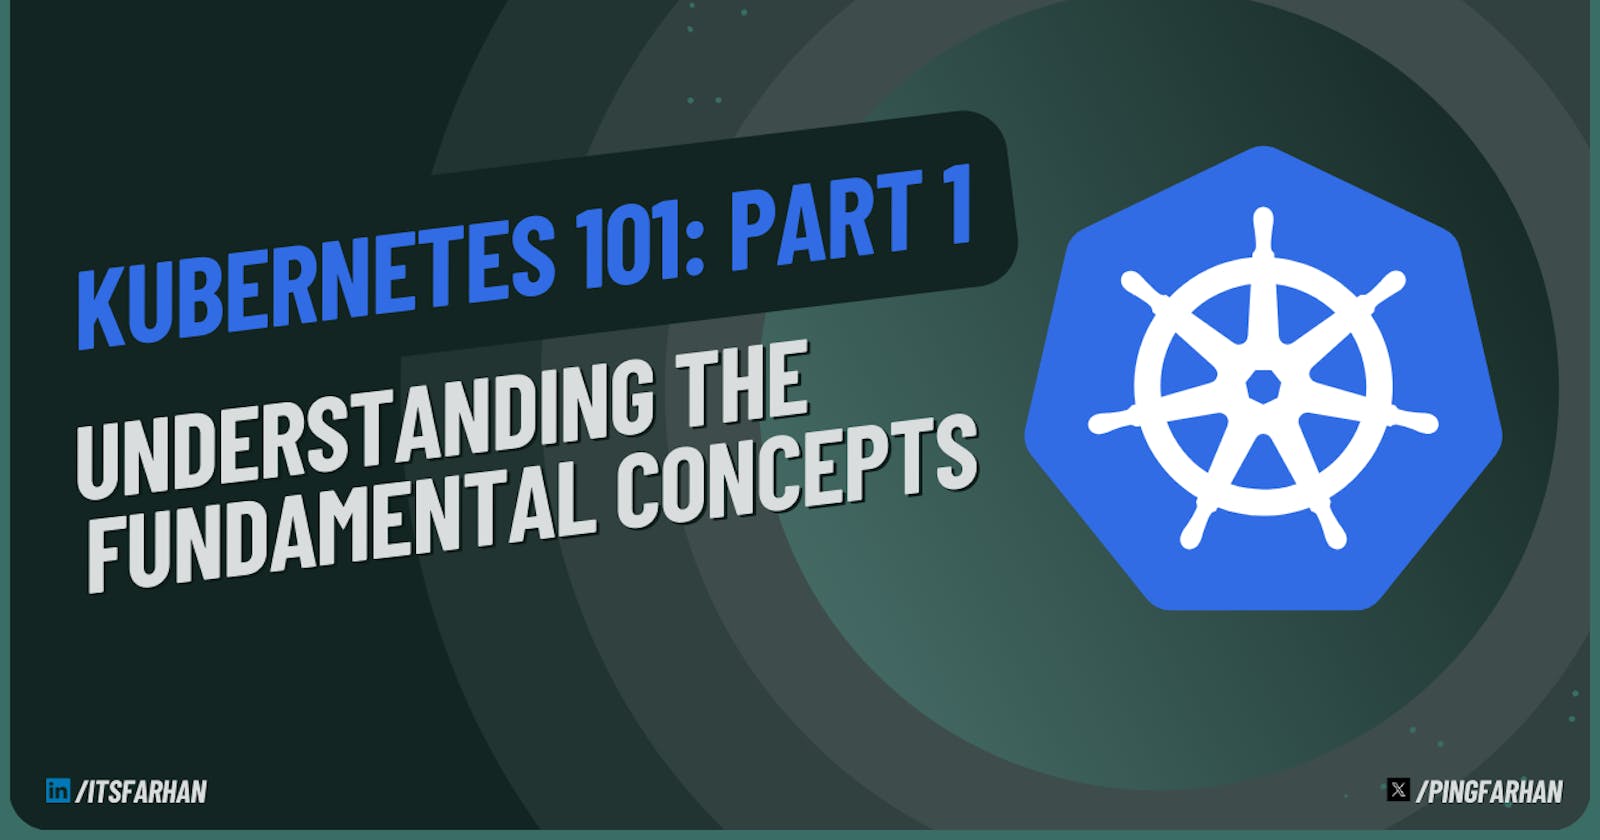 Kubernetes 101: Part 1 - Understanding the Fundamental Concepts